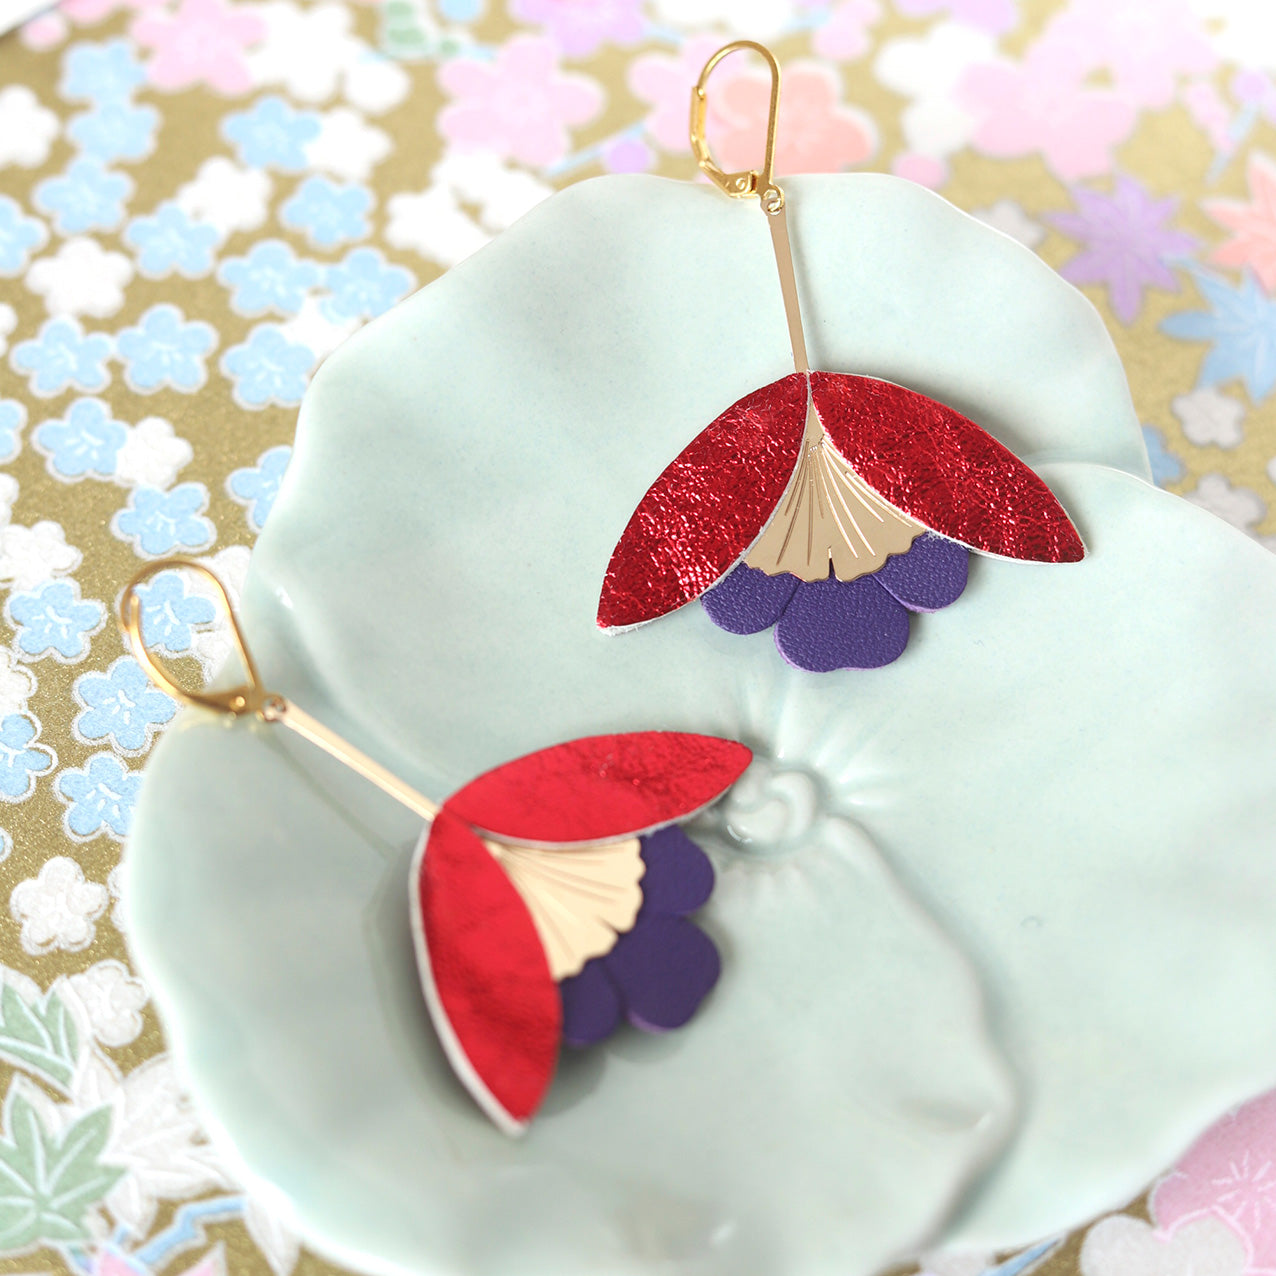 Ginkgo Flower earrings in metallic red leather and iris purple